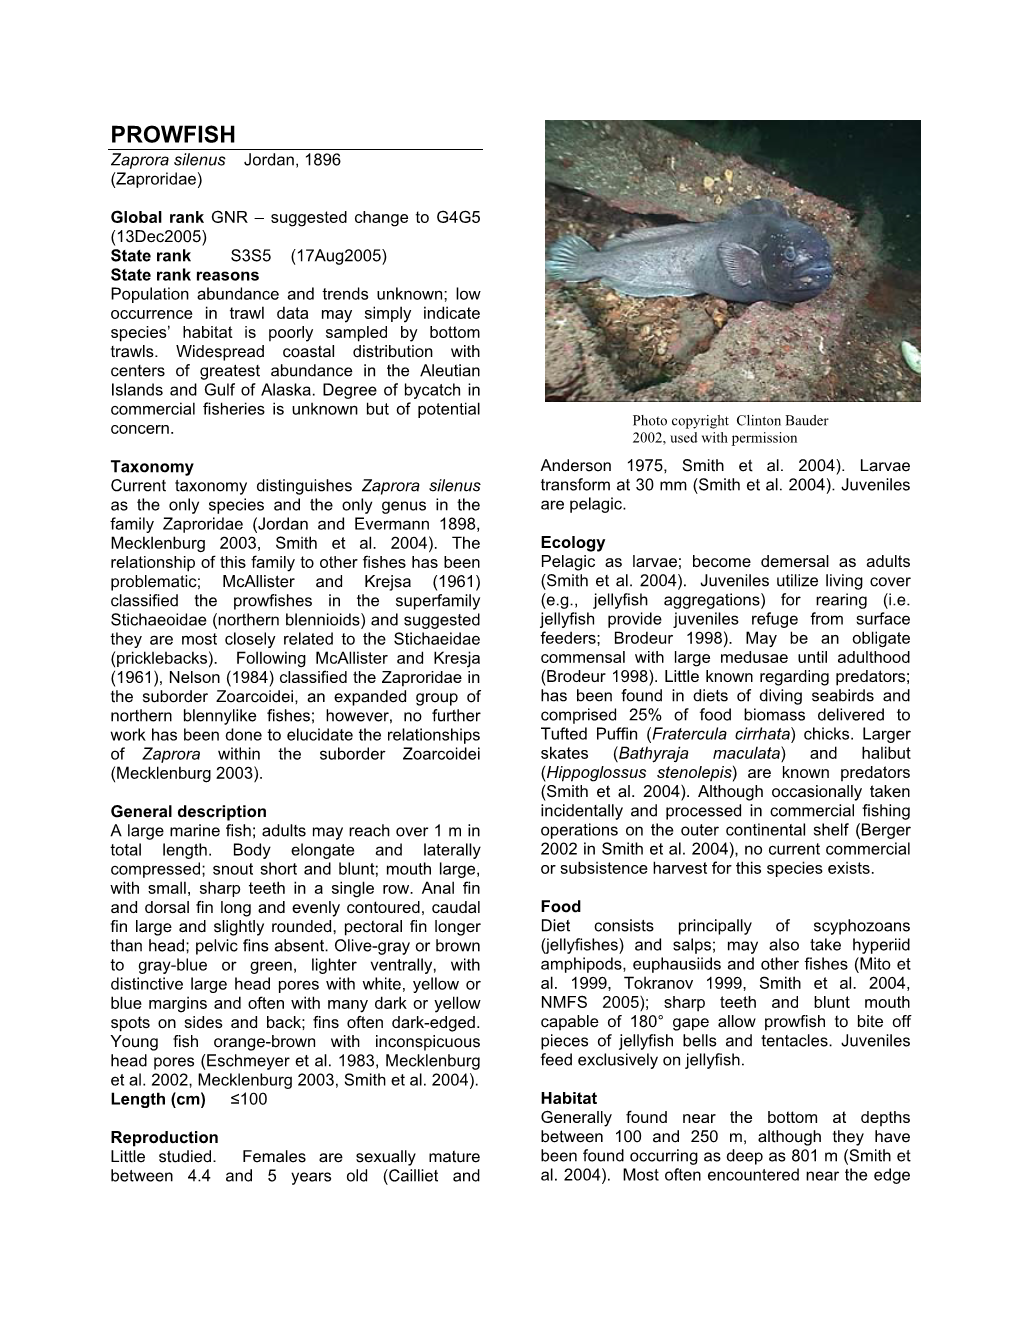 View PDF of Prowfish